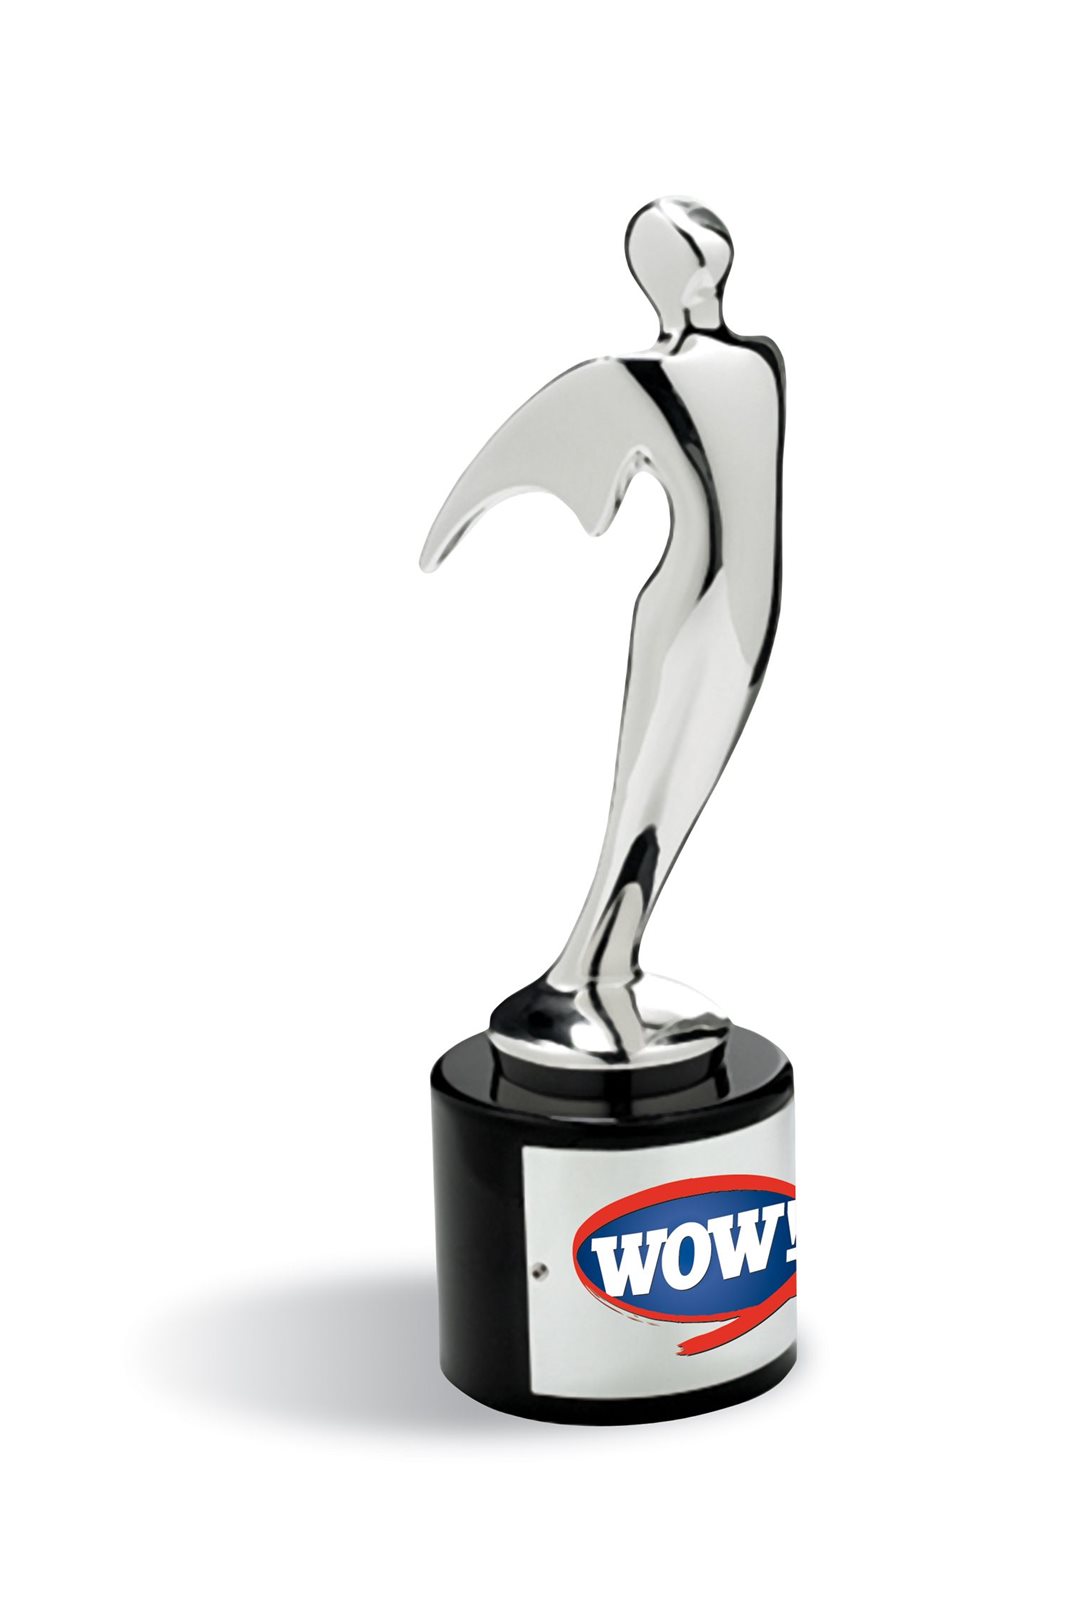 WOW Telly Award